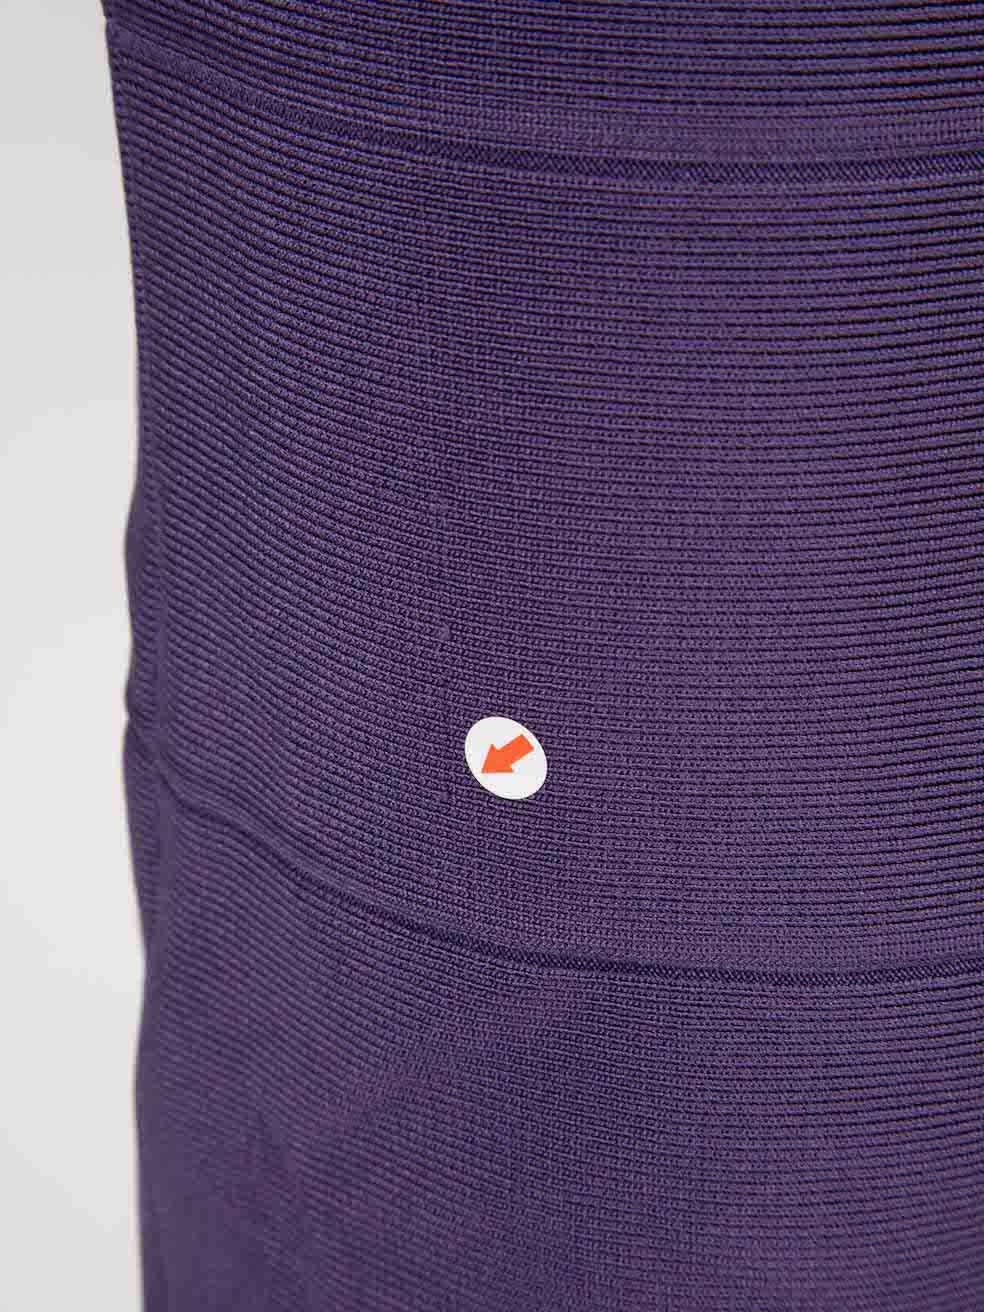 Herve Leger Purple Square Neck Bodycon Dress Size XS For Sale 2